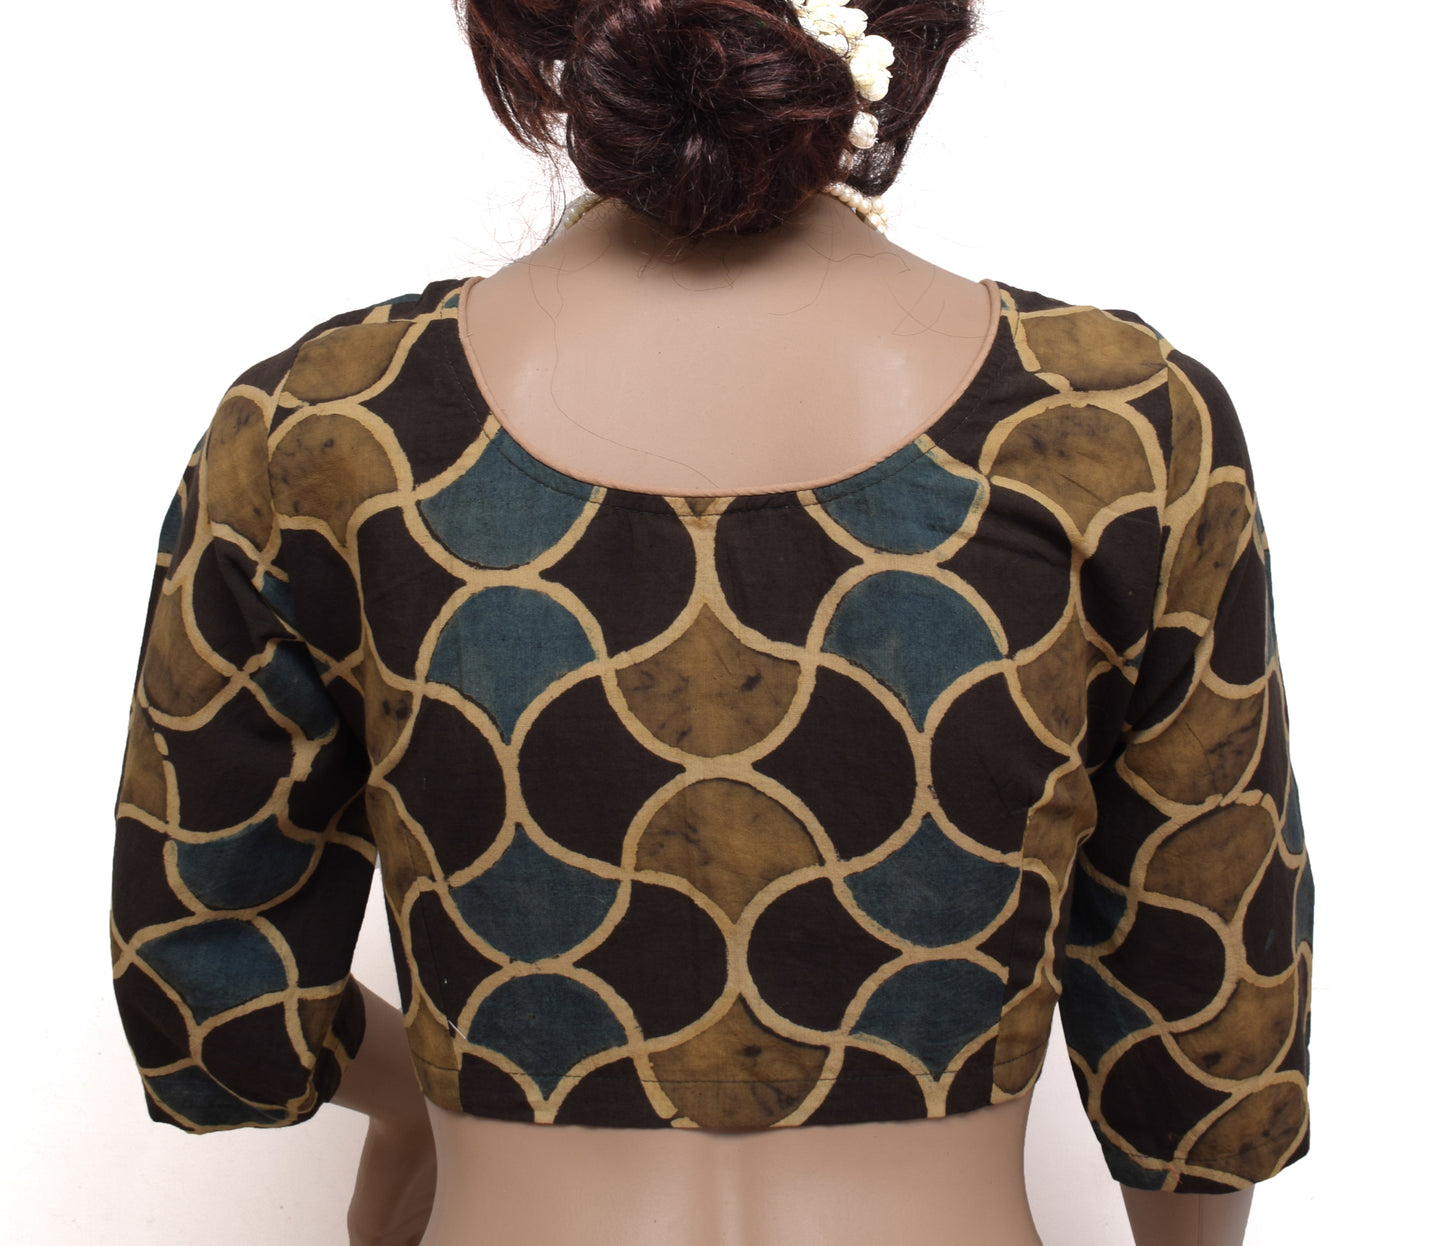 Sushila New Top Readymade Stitched Sari Blouse Cotton Printed Multi-Color Choli